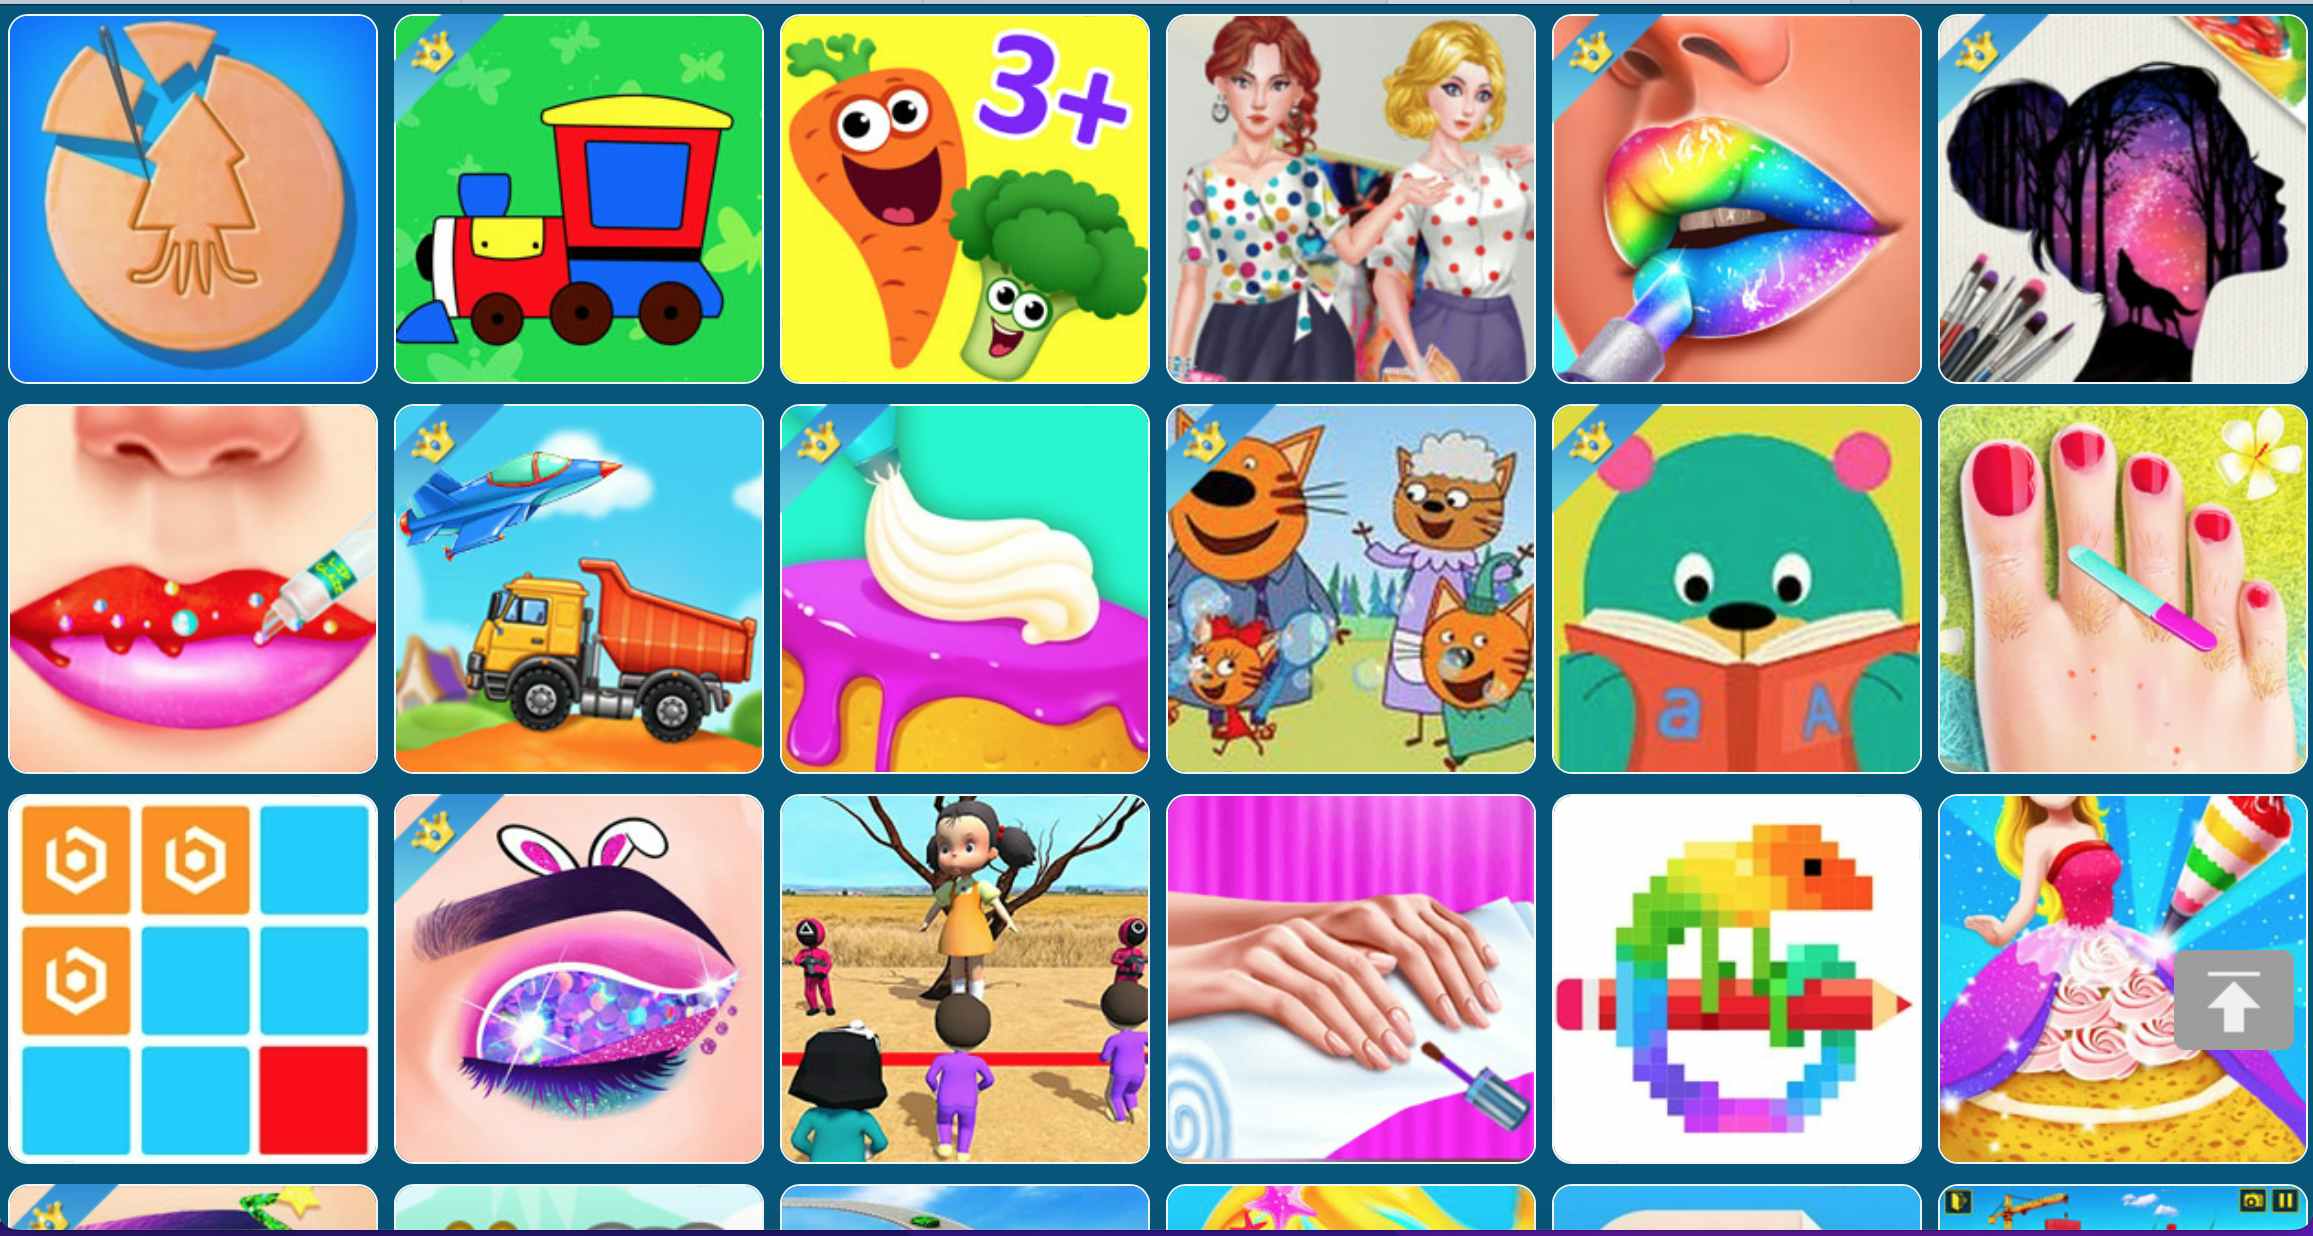 A screenshot of Yiv makeup, nail-painting, lip art, and cake decorating kids games.